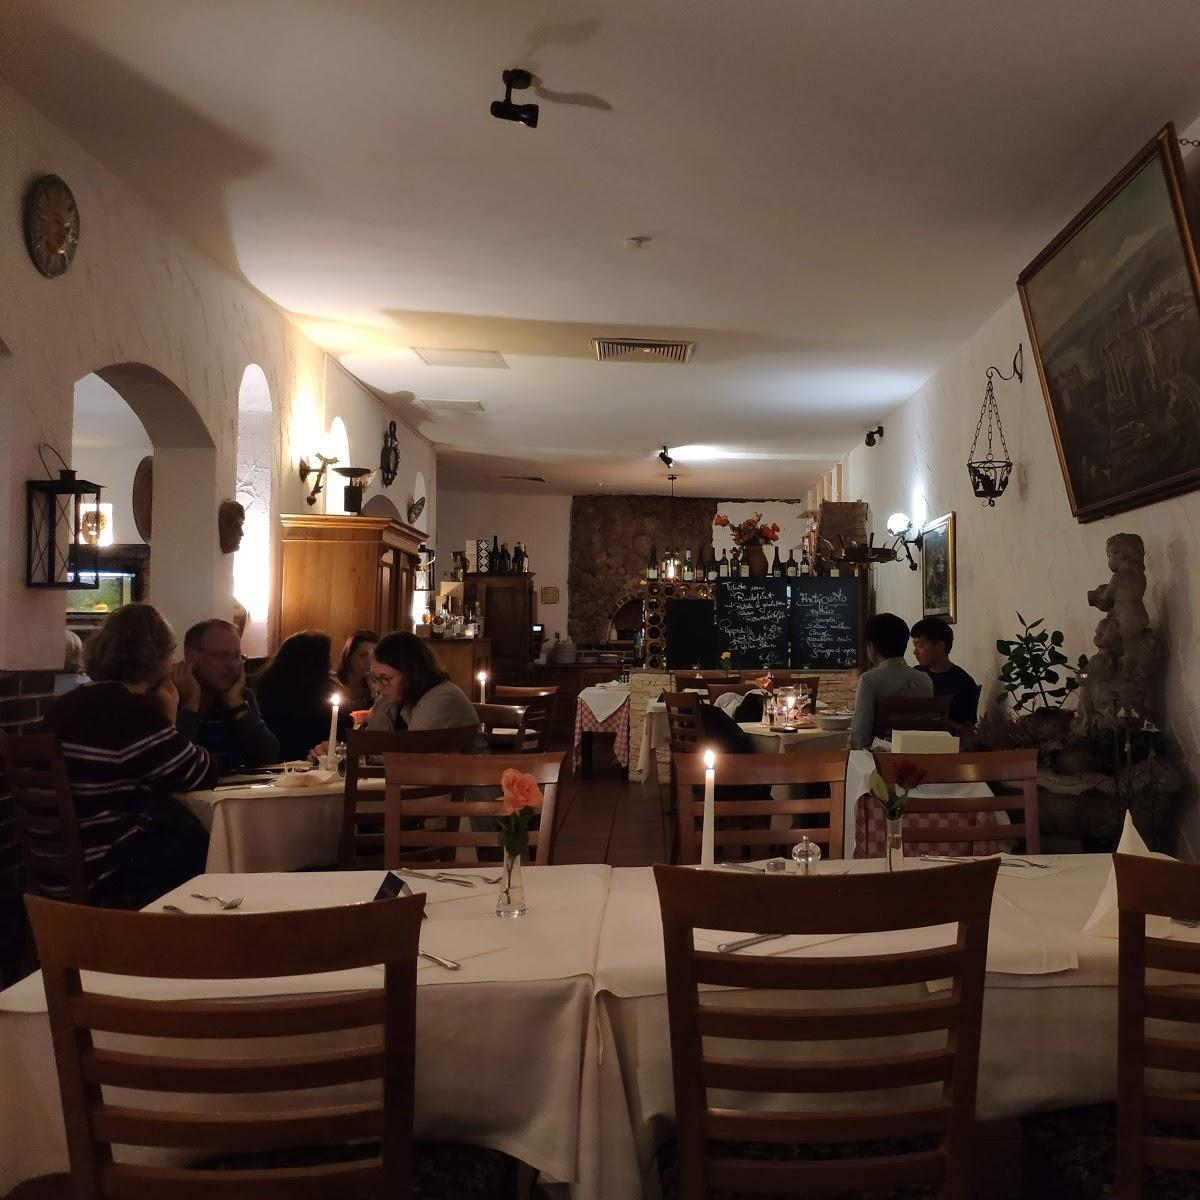 Restaurant "Ristorante Santa Lucia" in Heidelberg